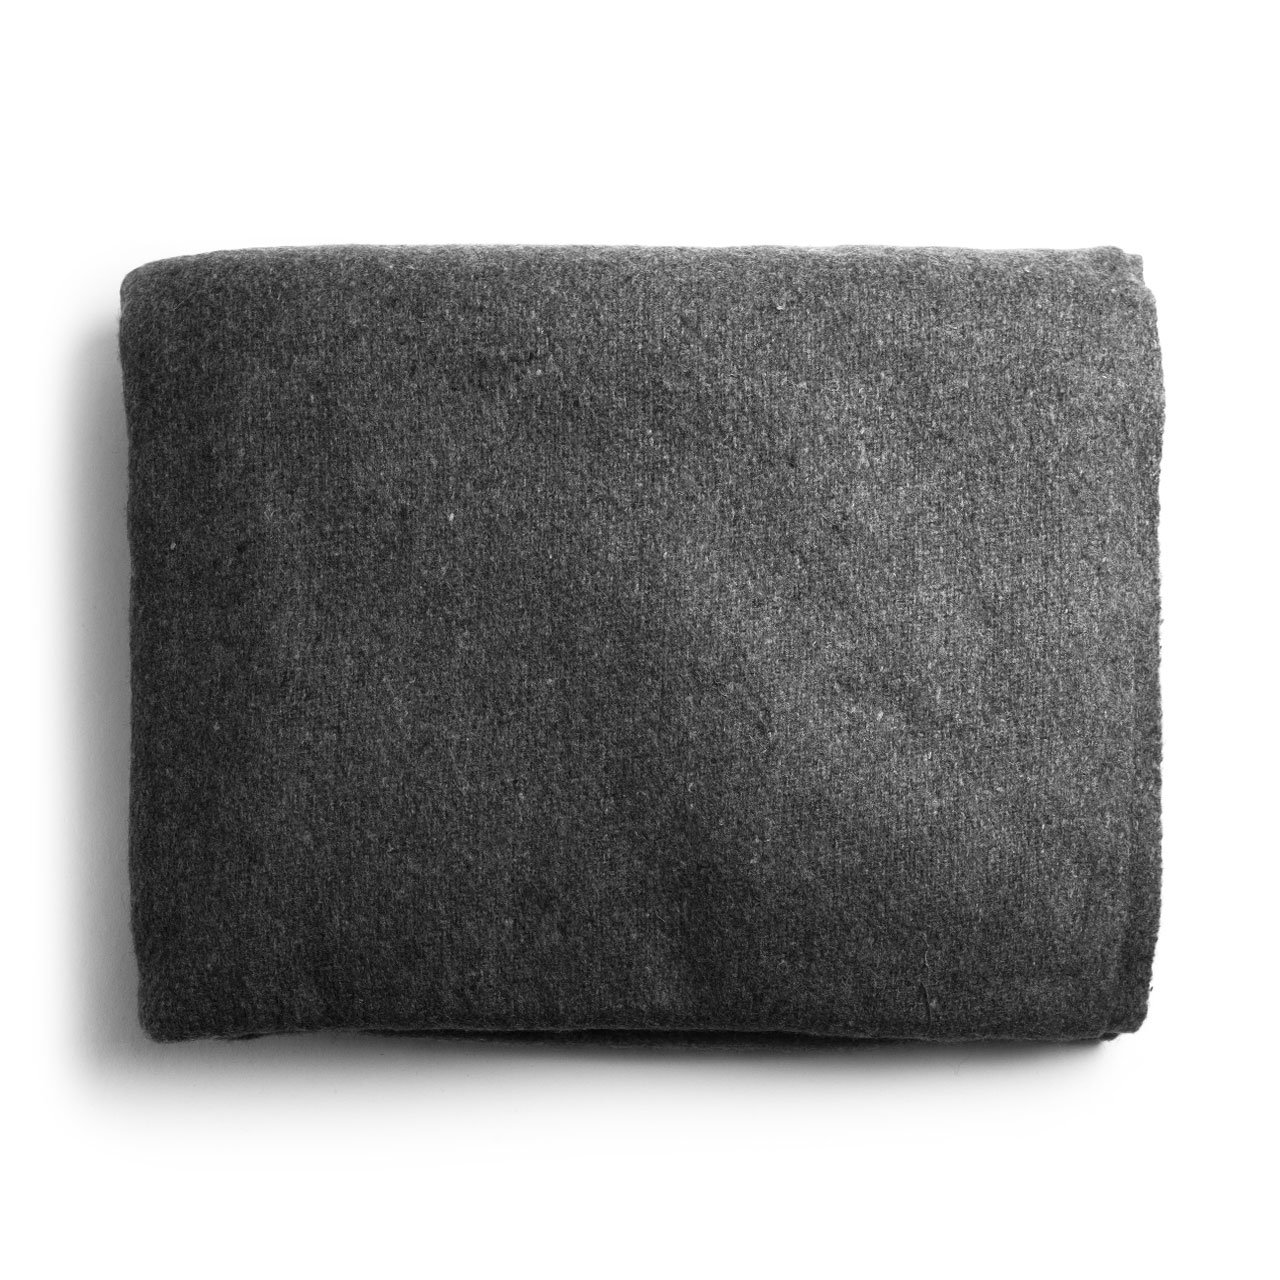 Standard Issue Wool Blanket | Uncrate